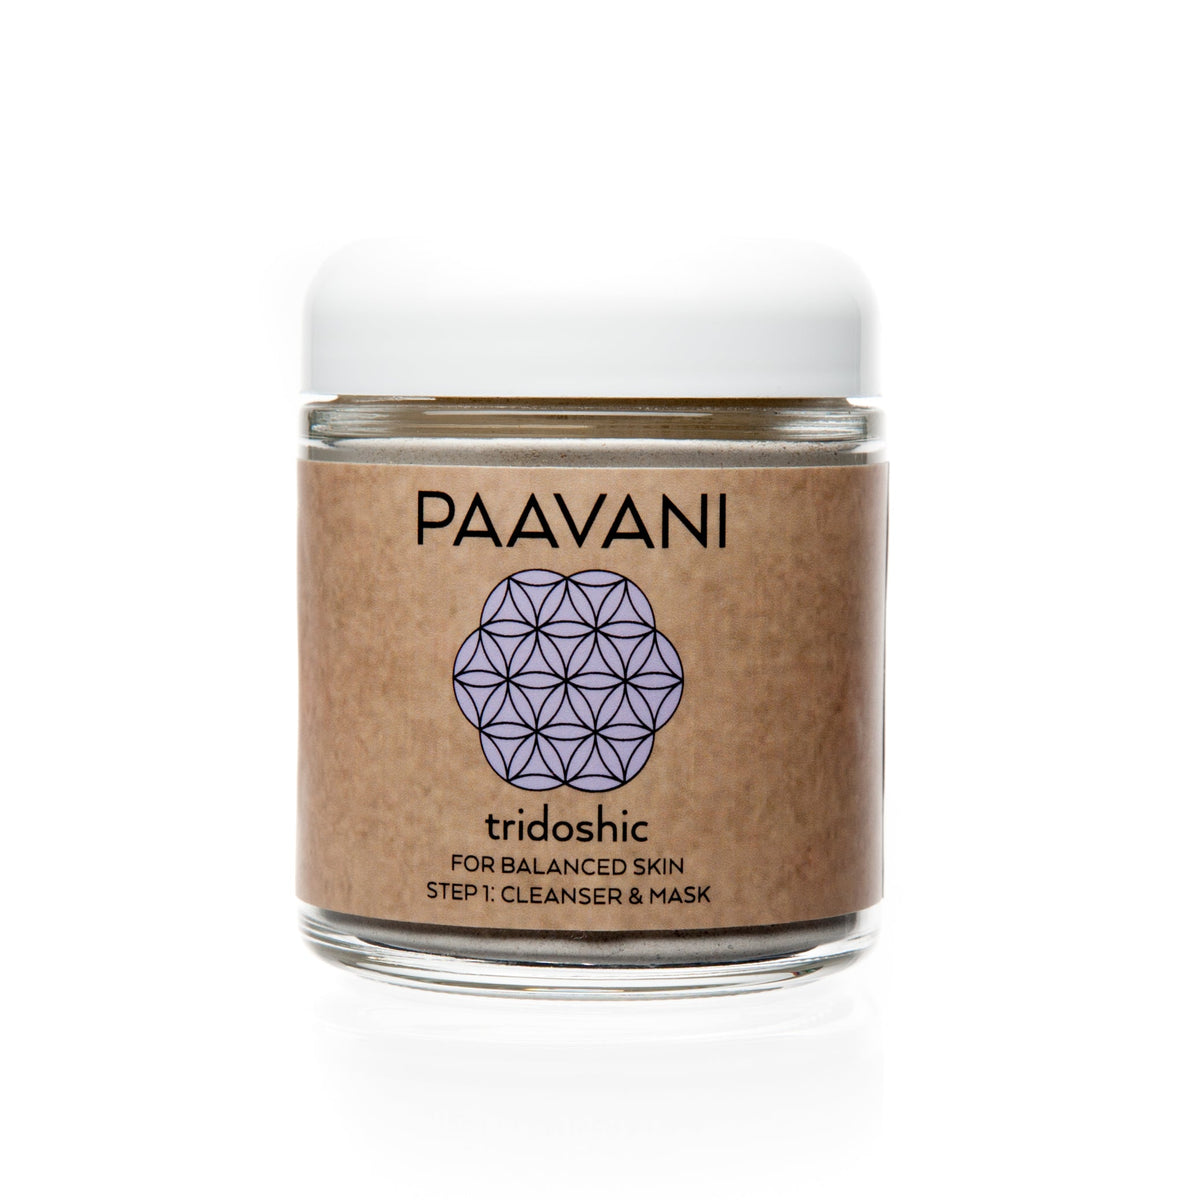 * Paavani Ayurveda - Tridoshic Cleanser & Mask with Organic Bentonite Clay, Triphala, Shatavari and Cardamom, Ayurvedic Skincare 4 oz.-0